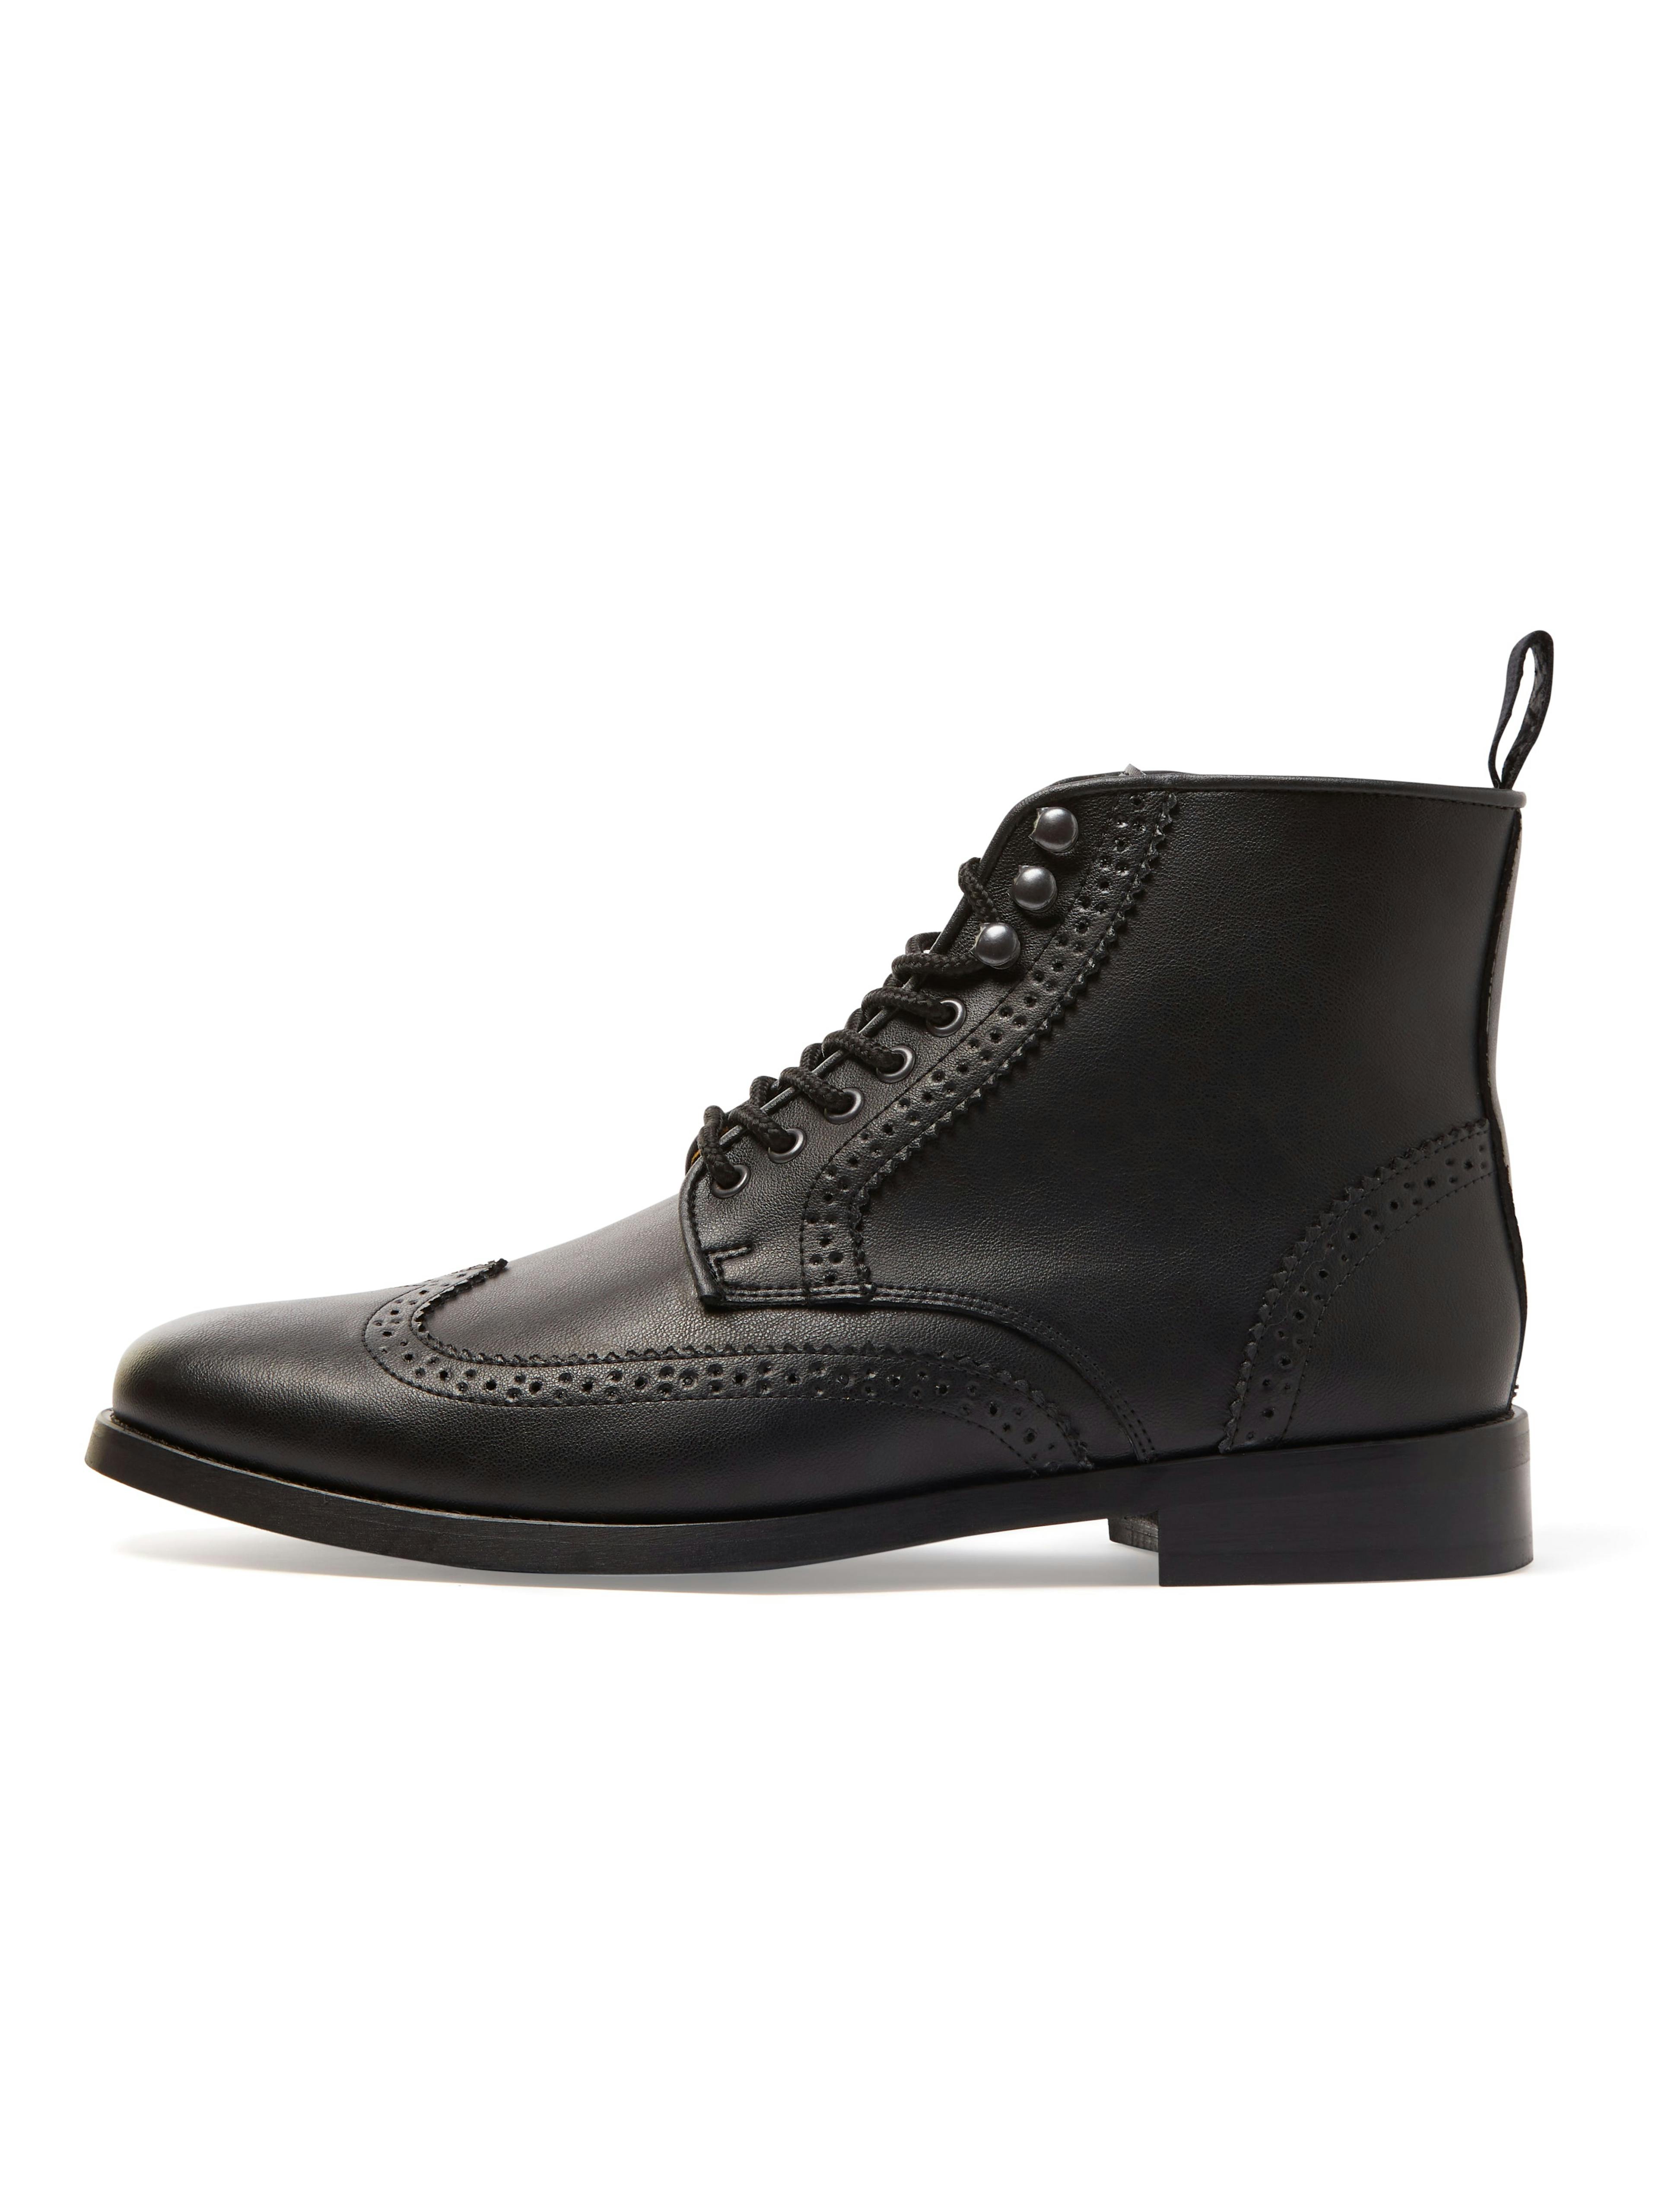 Vegan Leather Brogue Boots | Black & Dark Brown